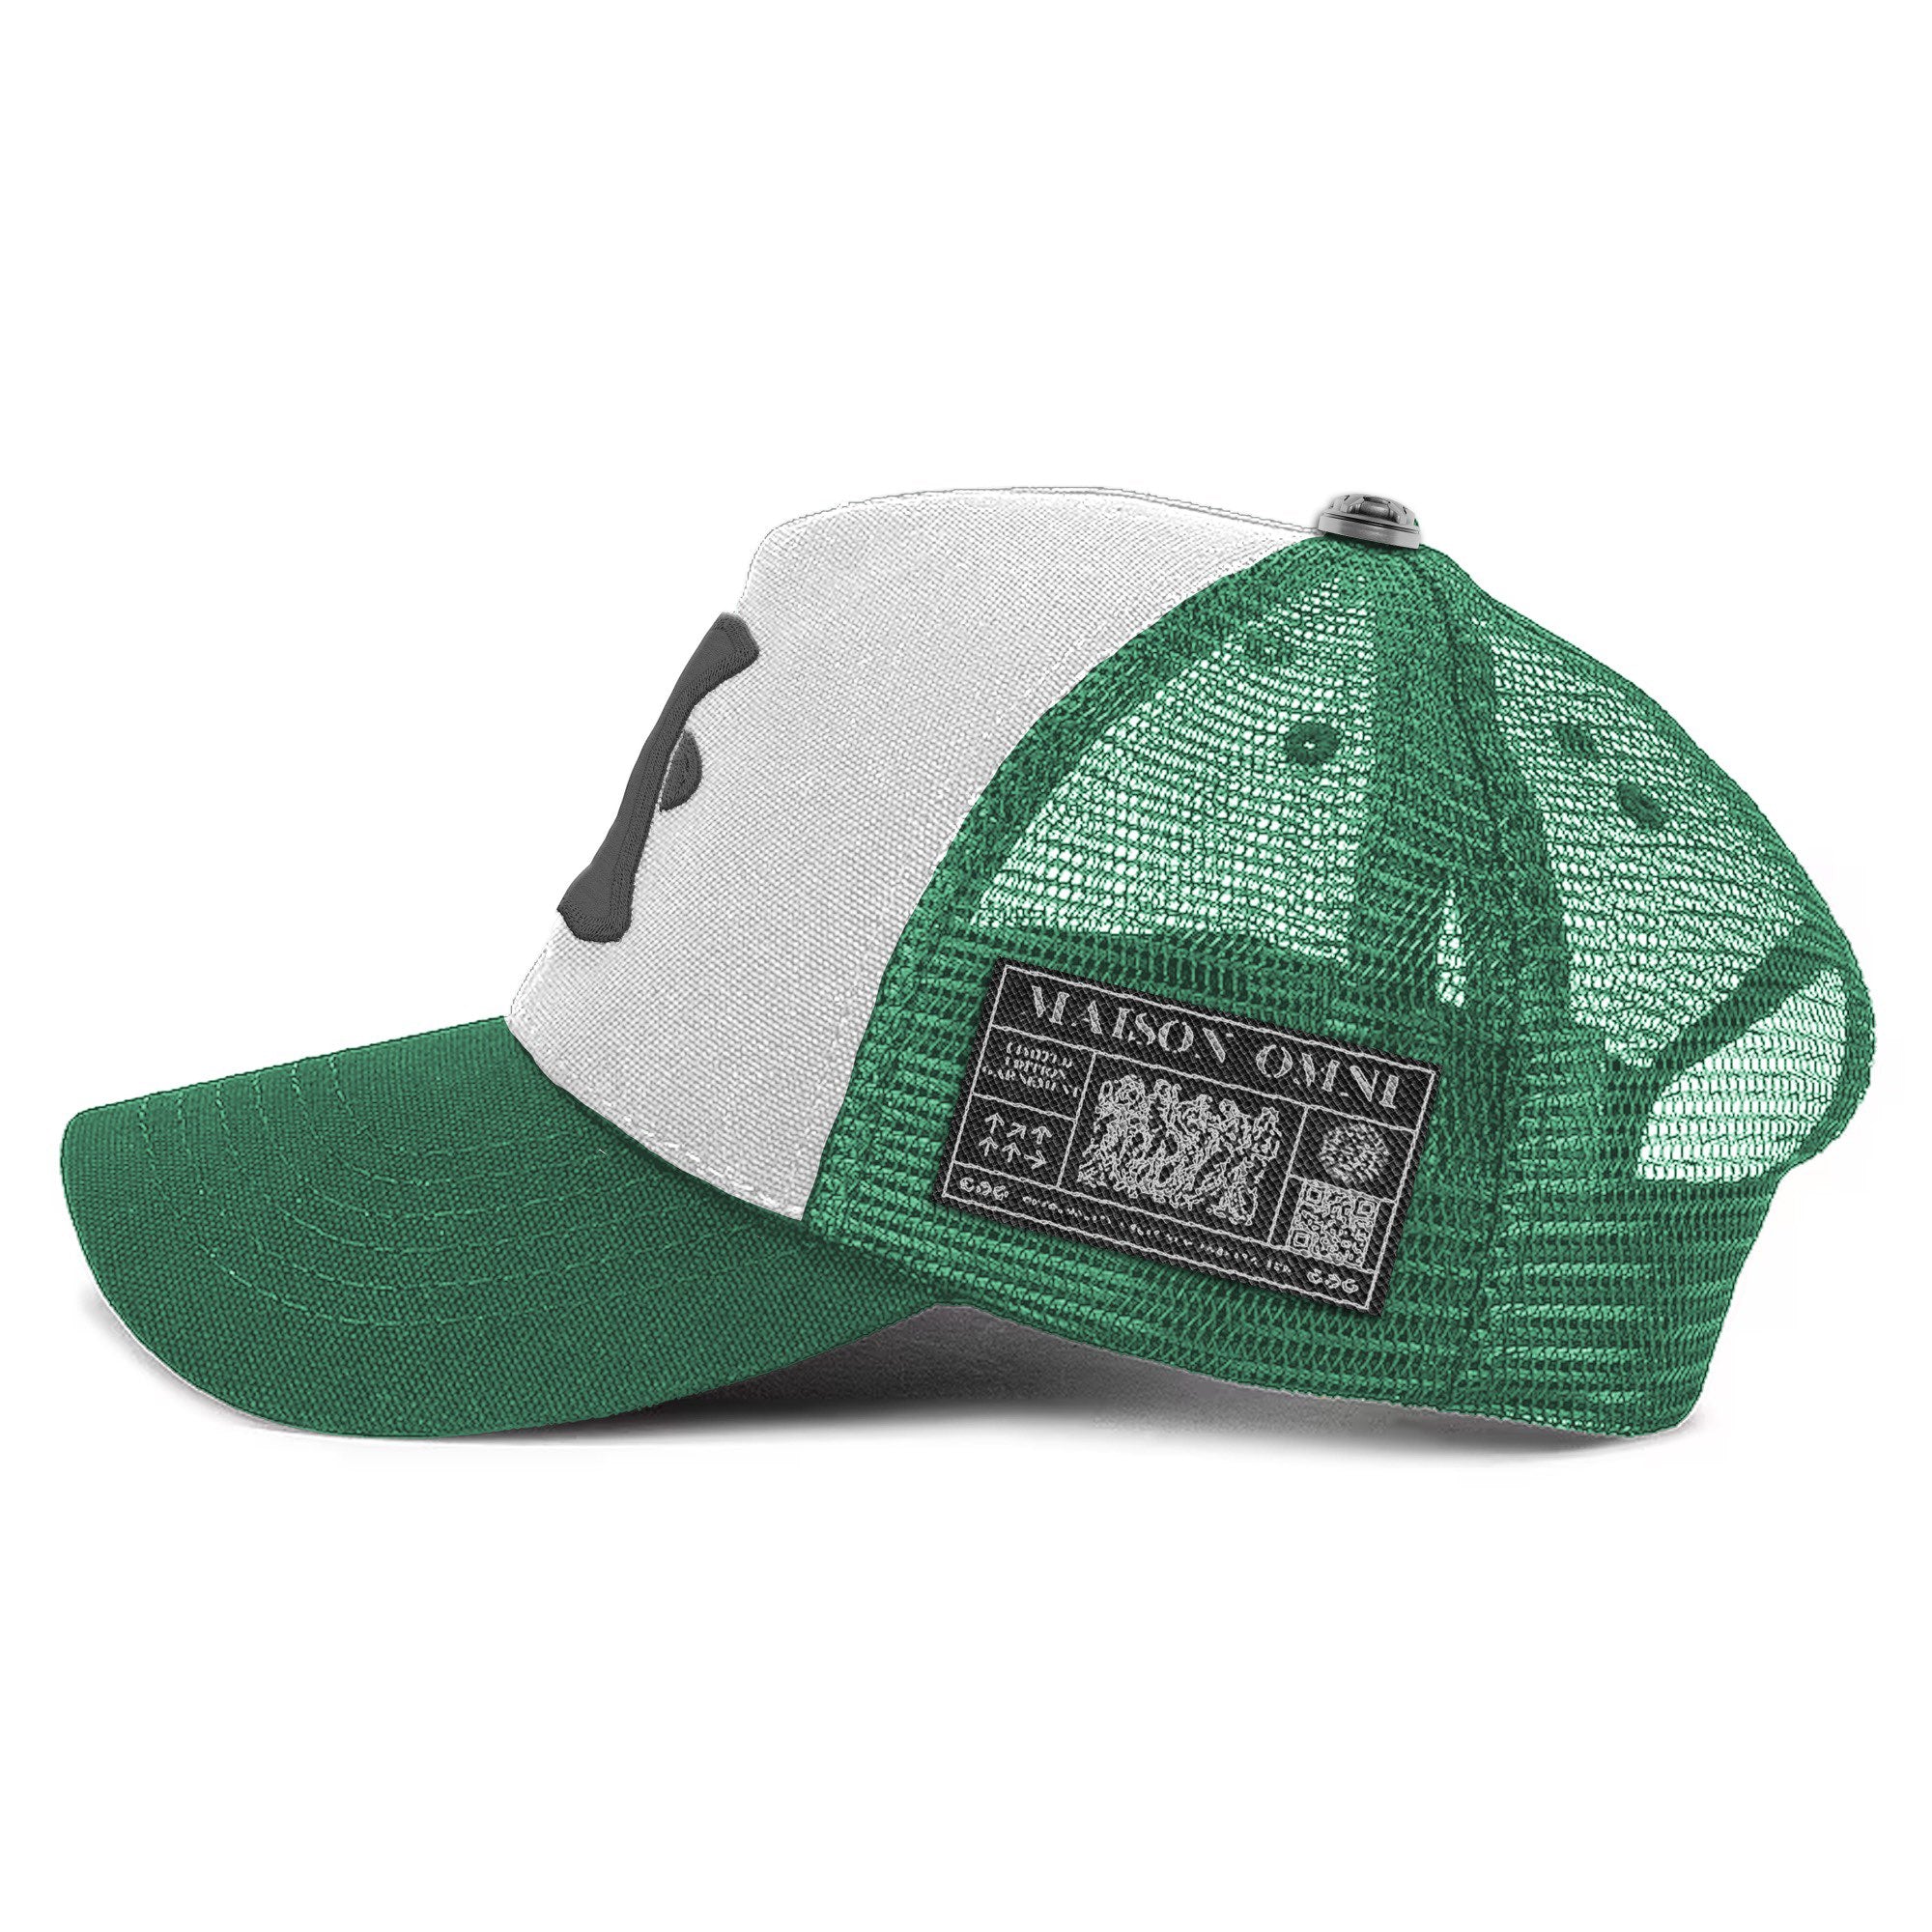 Maison Omni trucker hat green